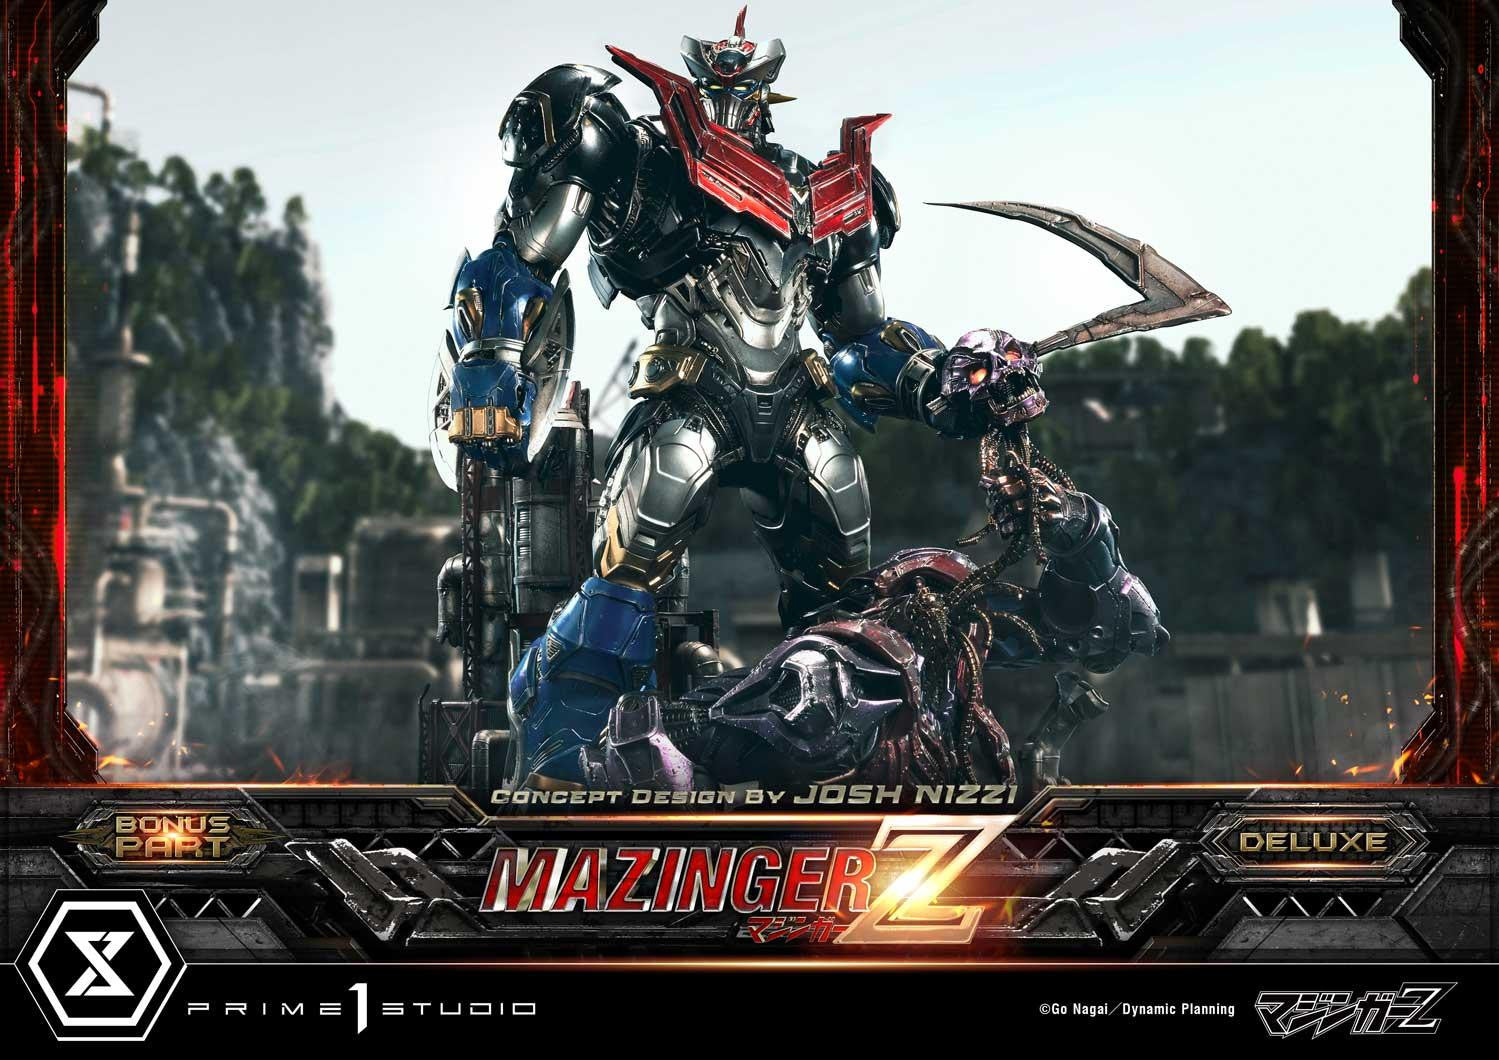 Mazinger Z Deluxe Version Statue by Prime 1 Studio